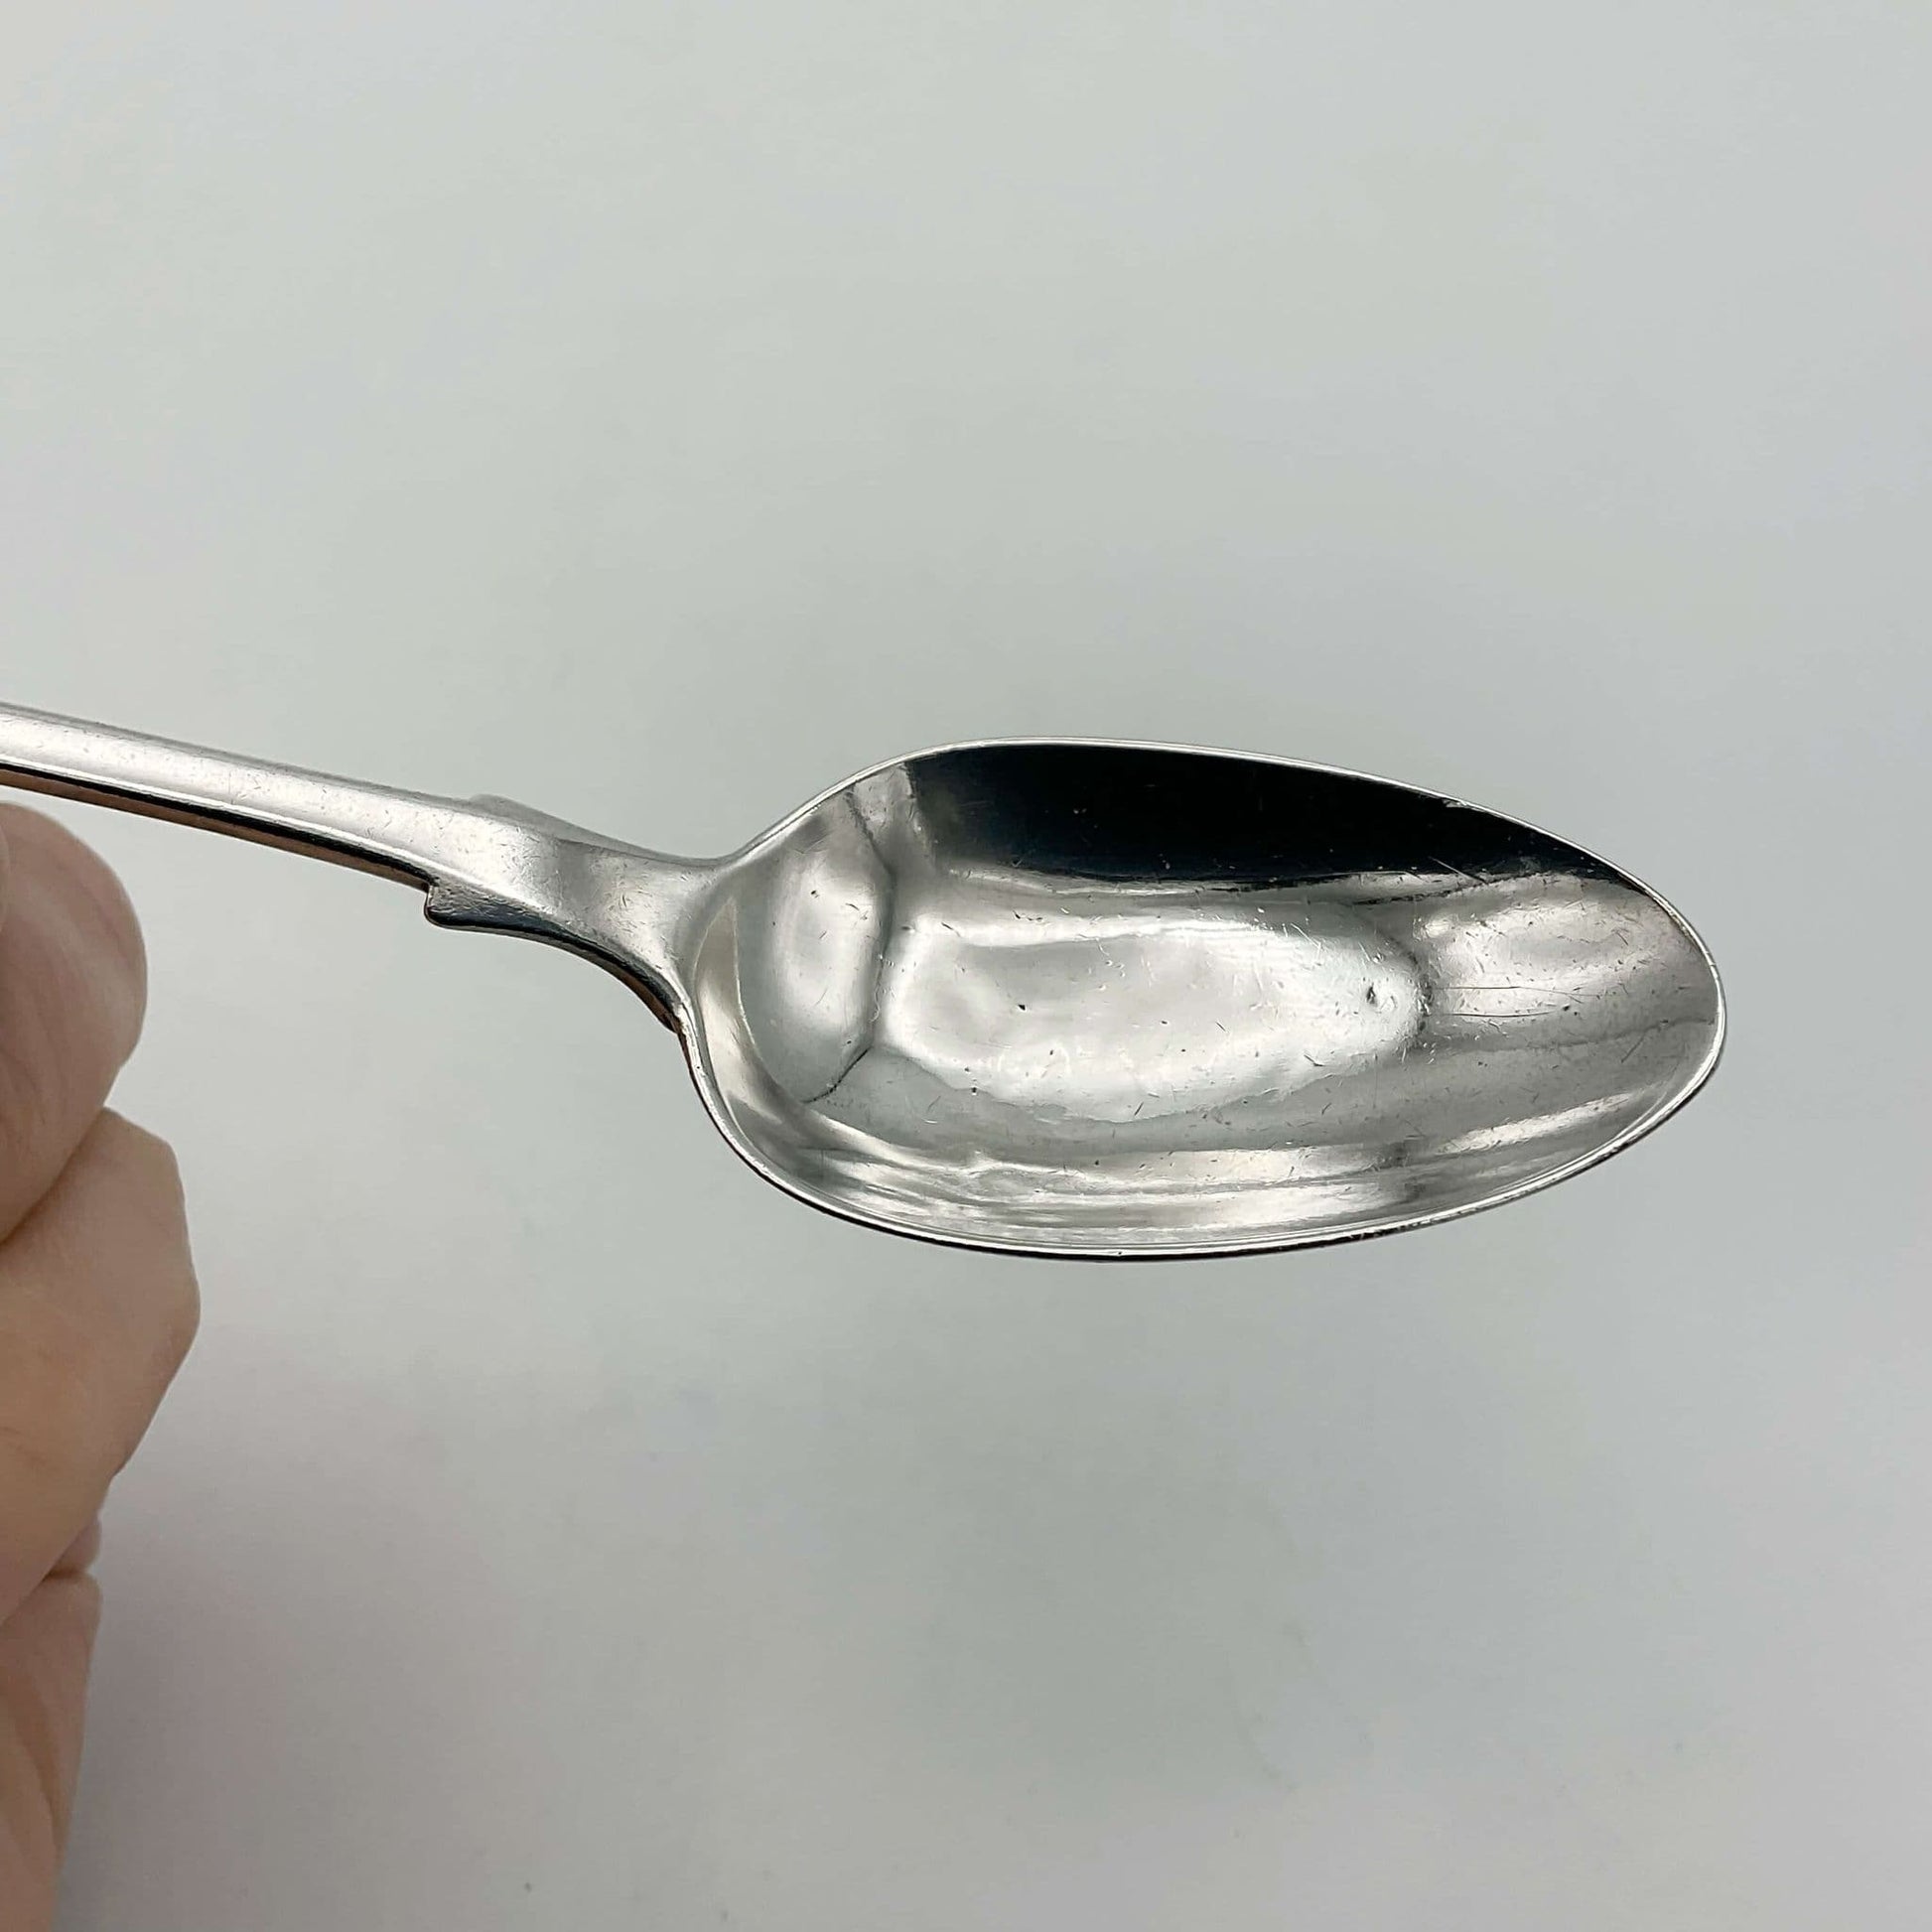 Bowl of an antique silver teaspoon